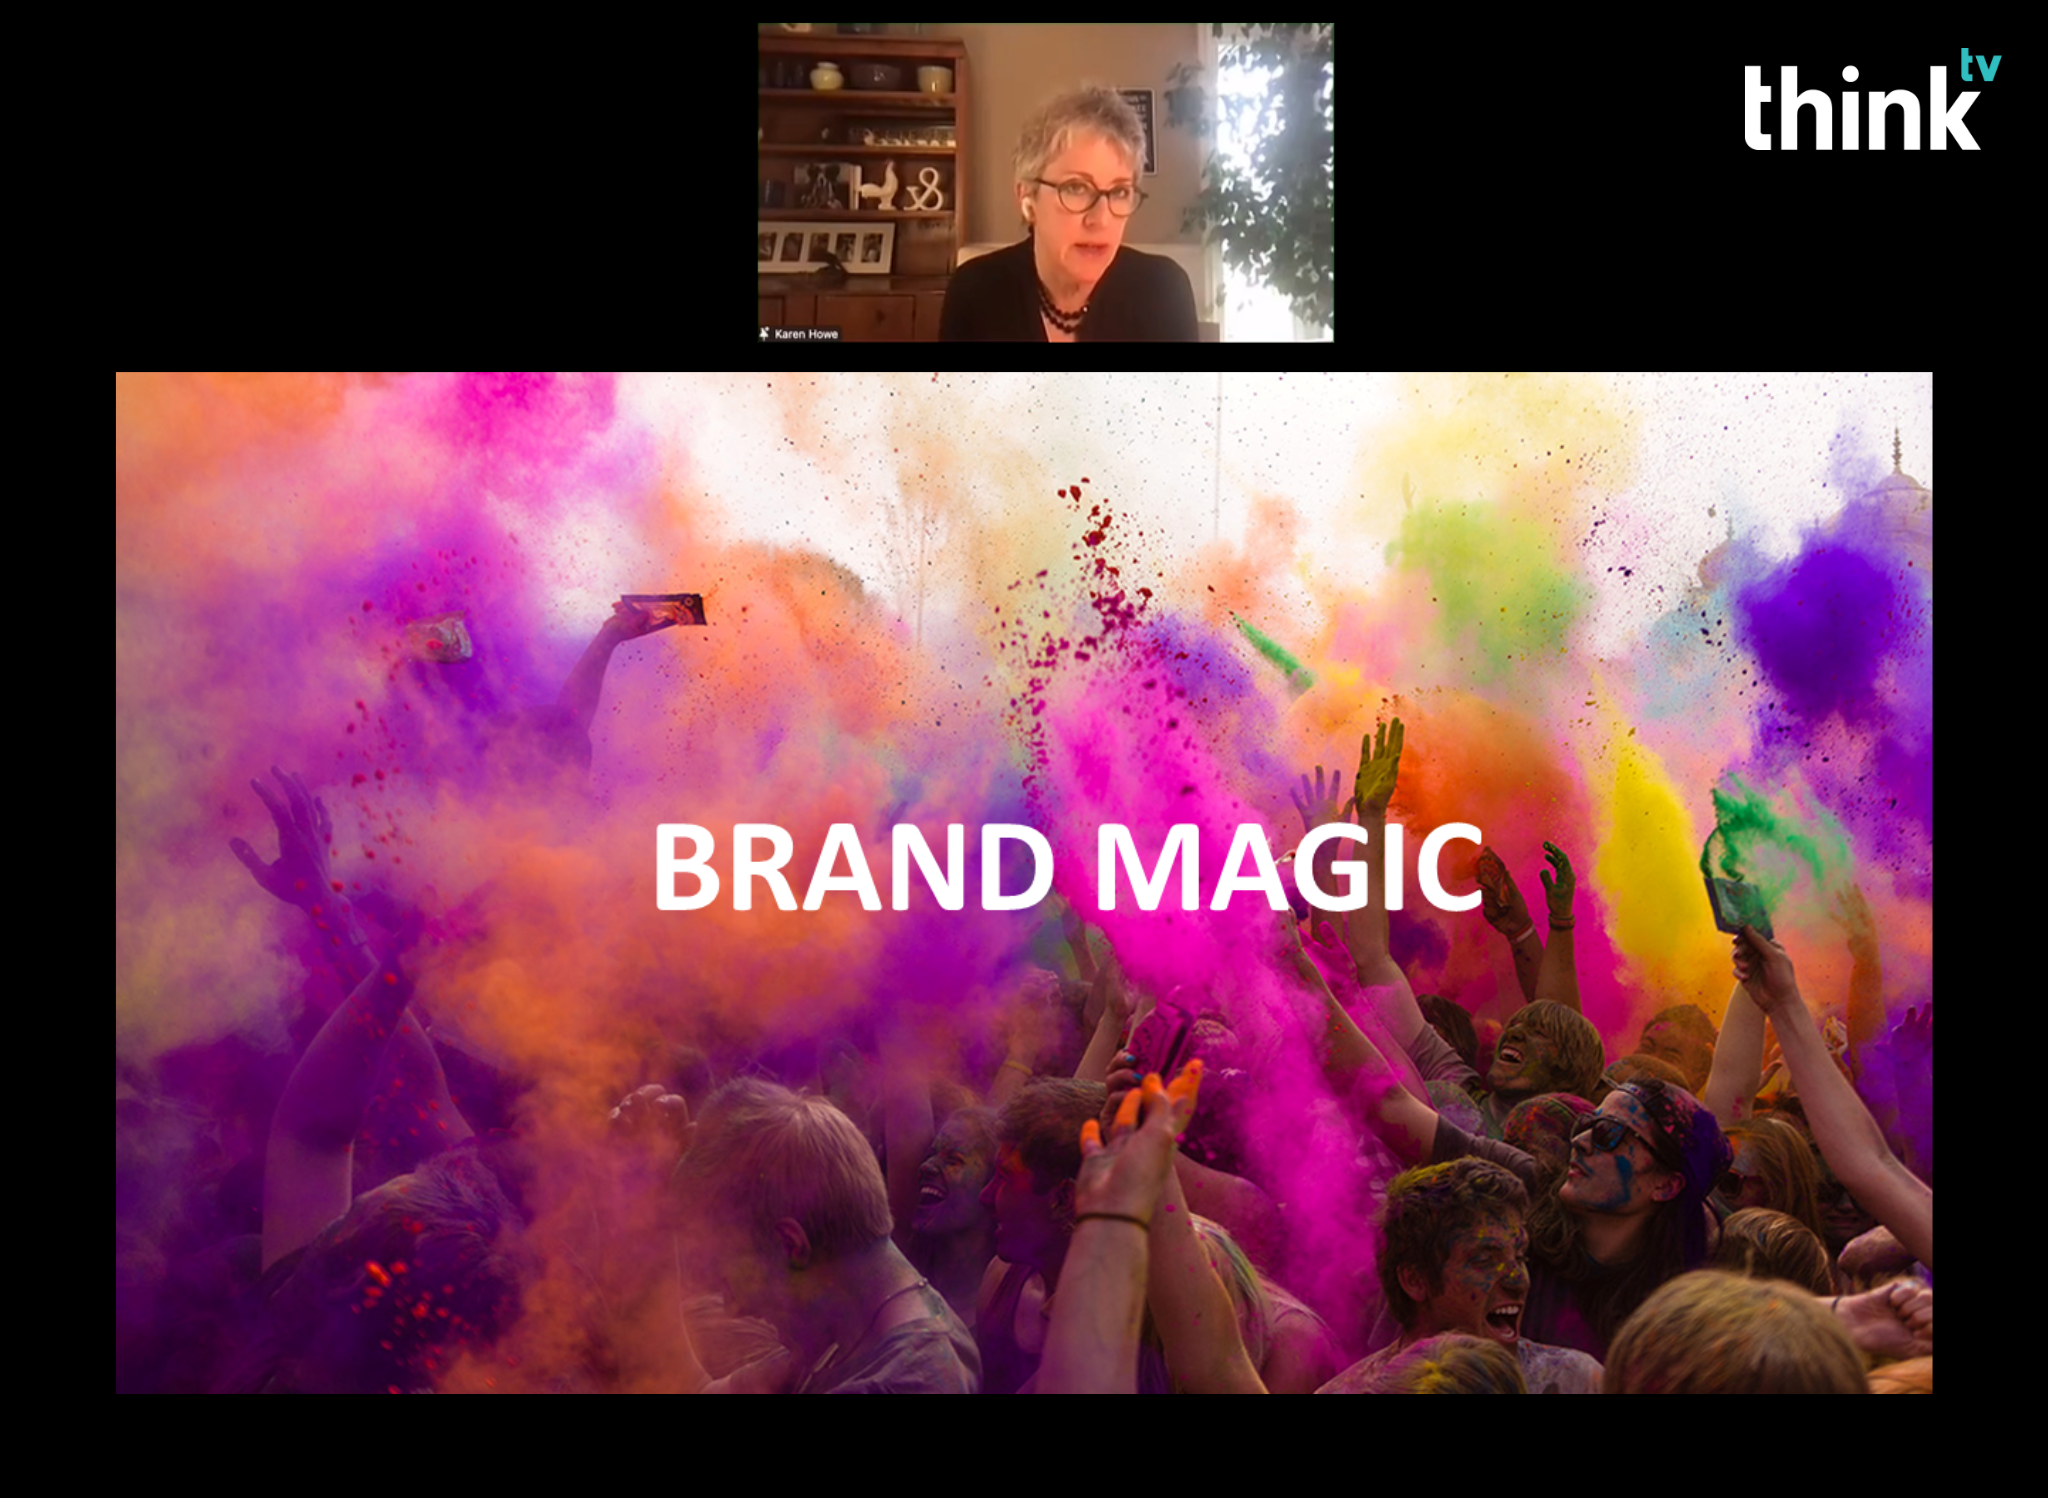 brand-magic-post-event-website-2048-x-1498